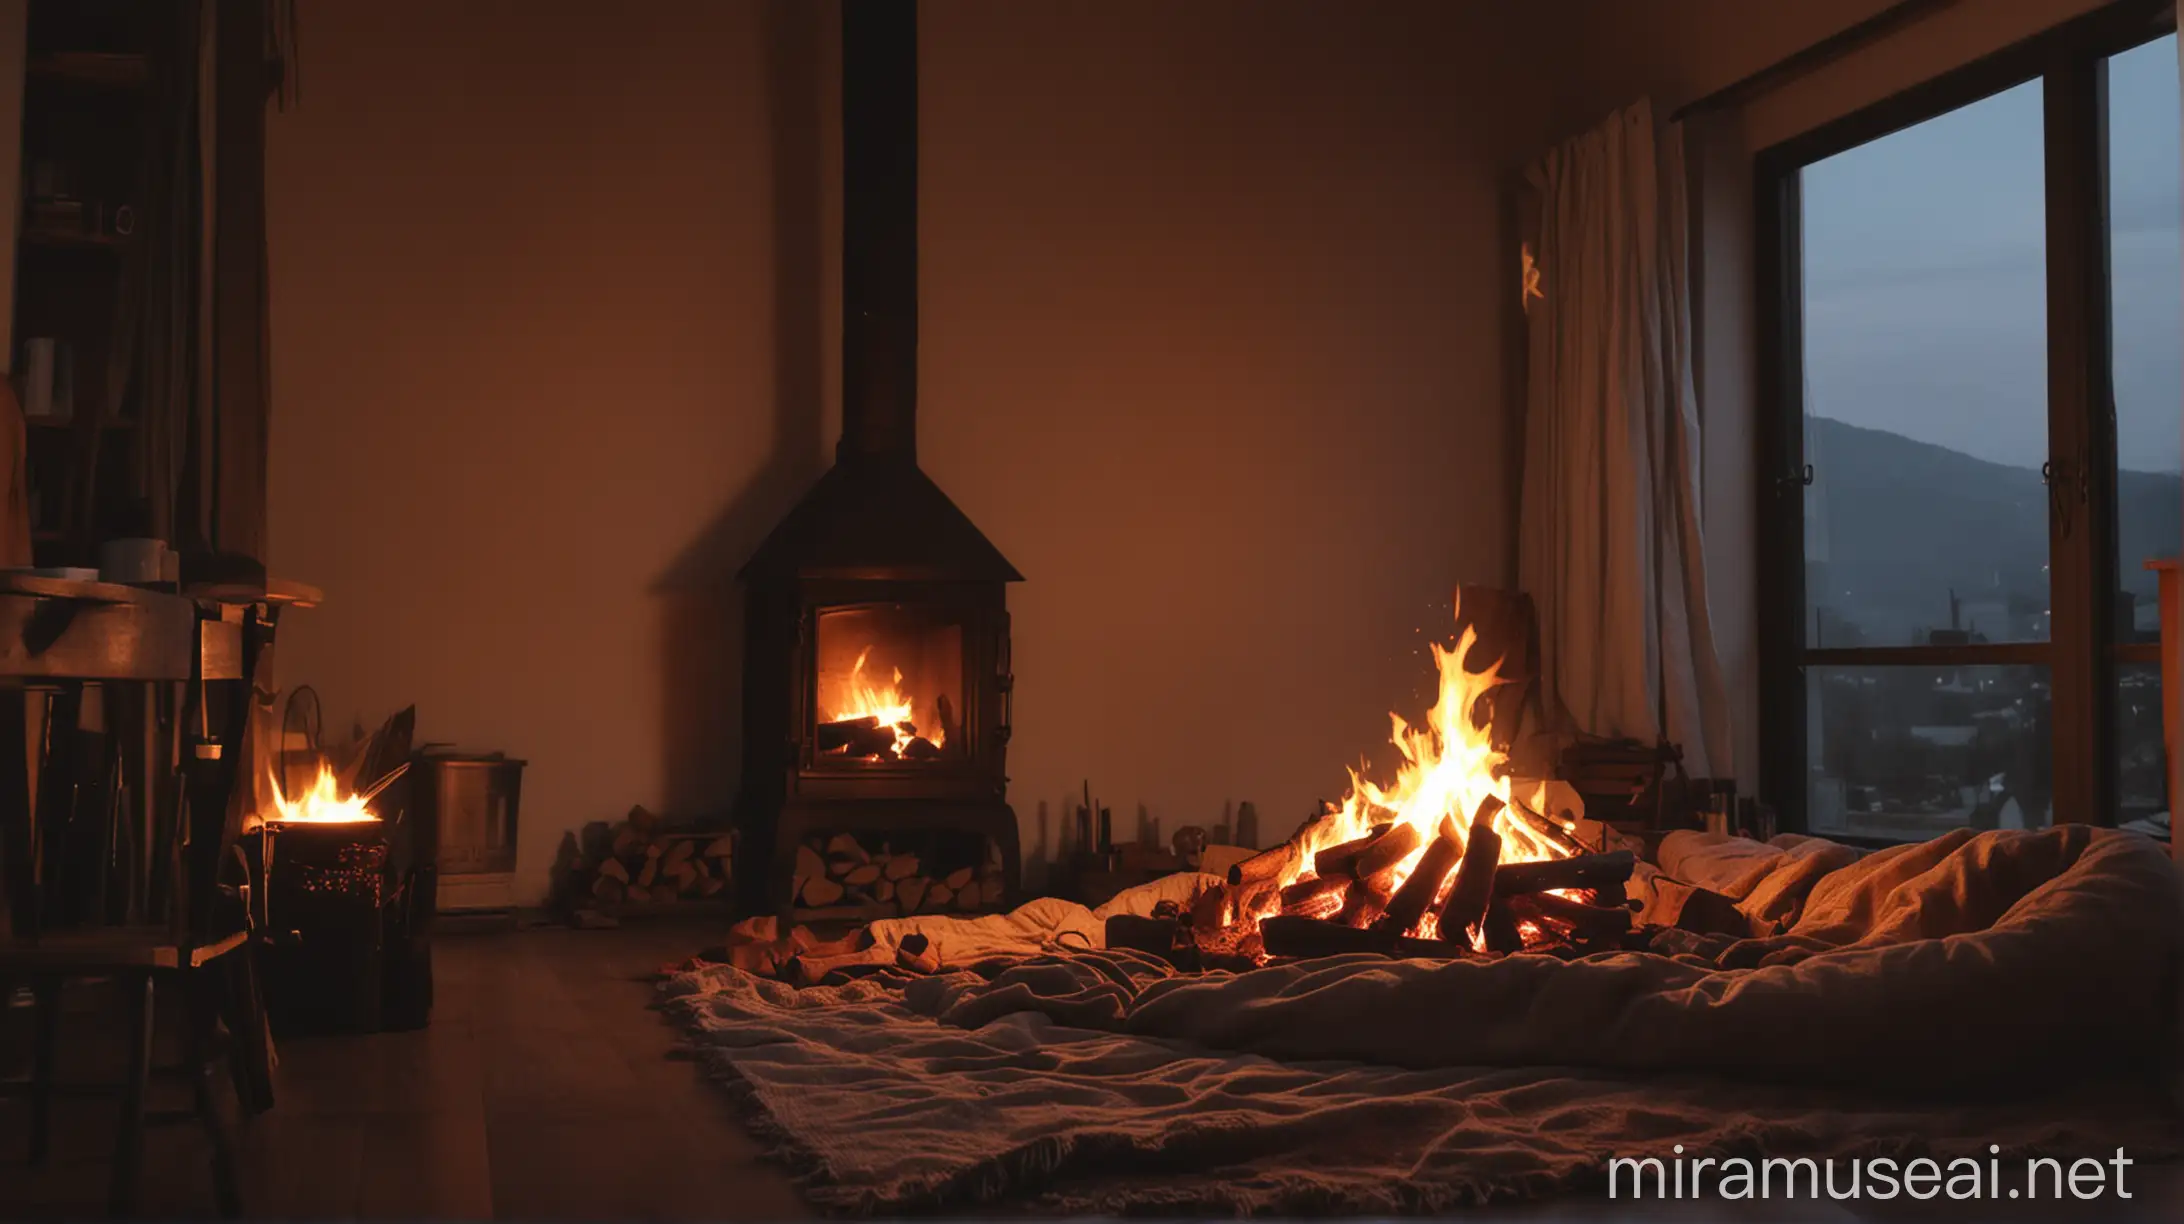 Cozy Evening Scene with Indoor Fireplace